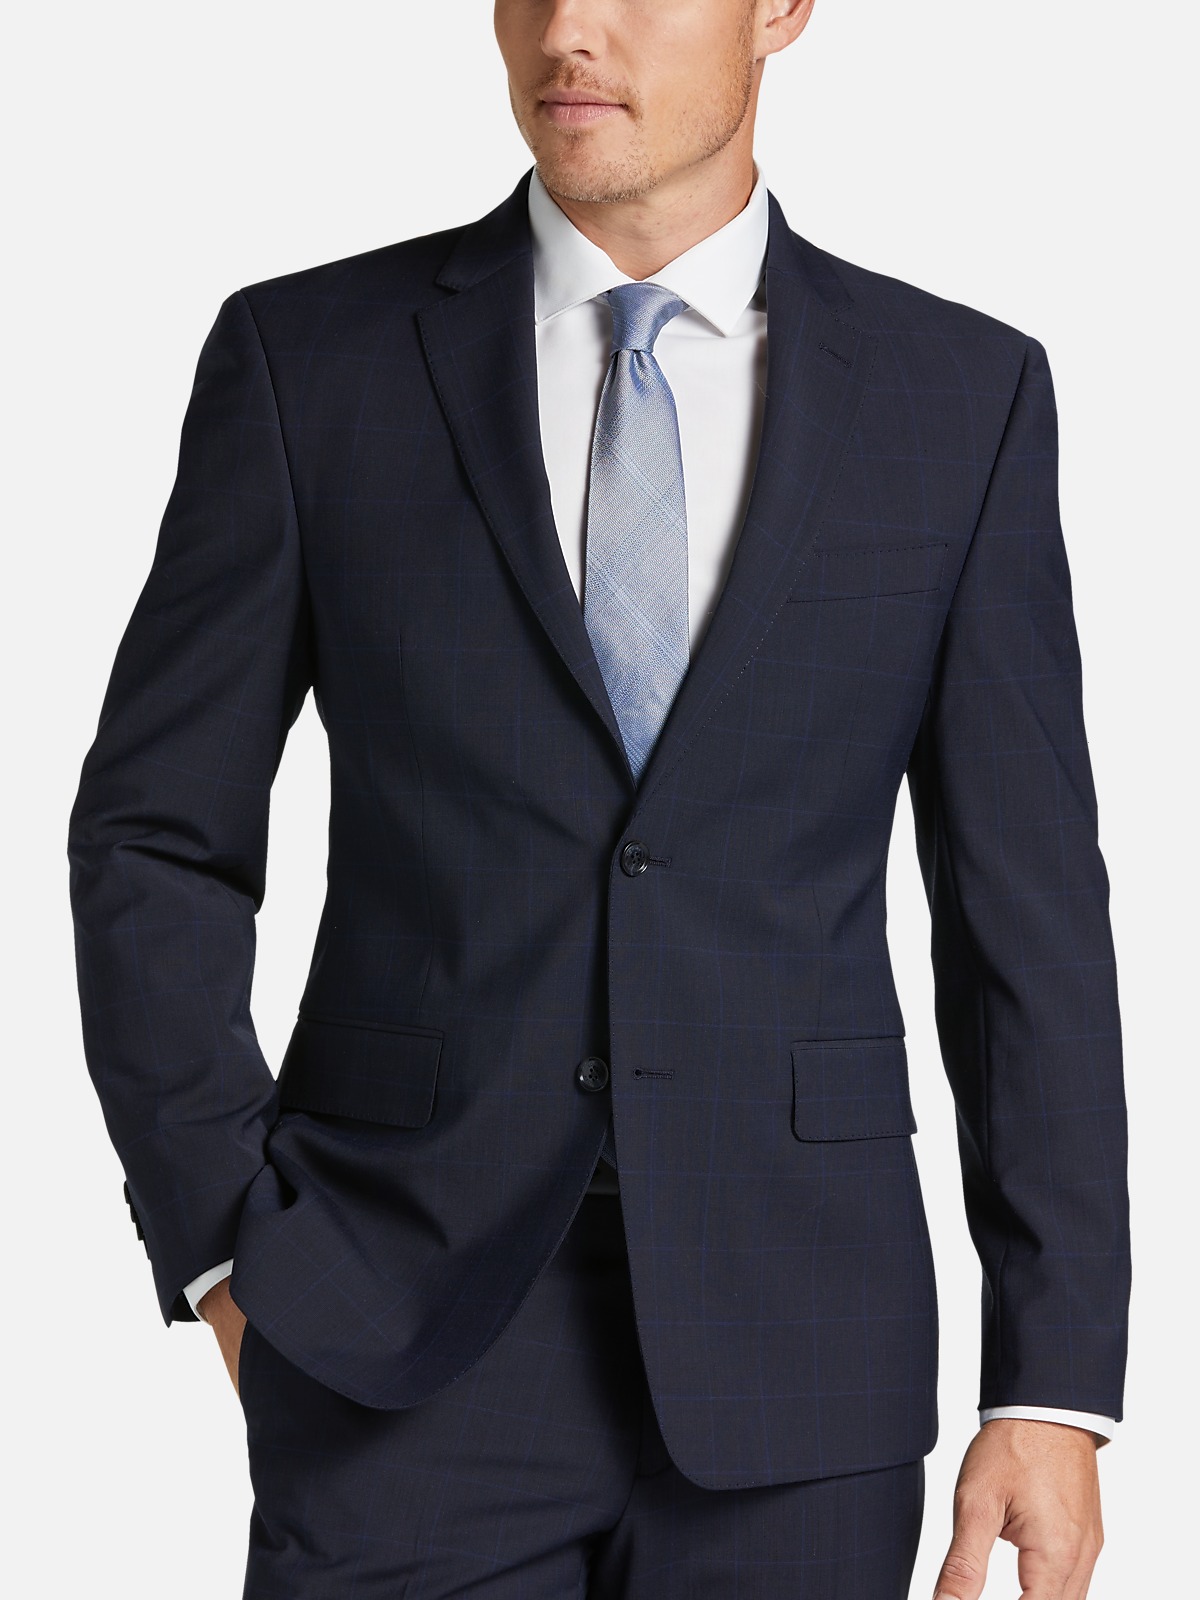 Men\'s Sale| Wearhouse Modern Suit Hilfiger Tommy All | Fit